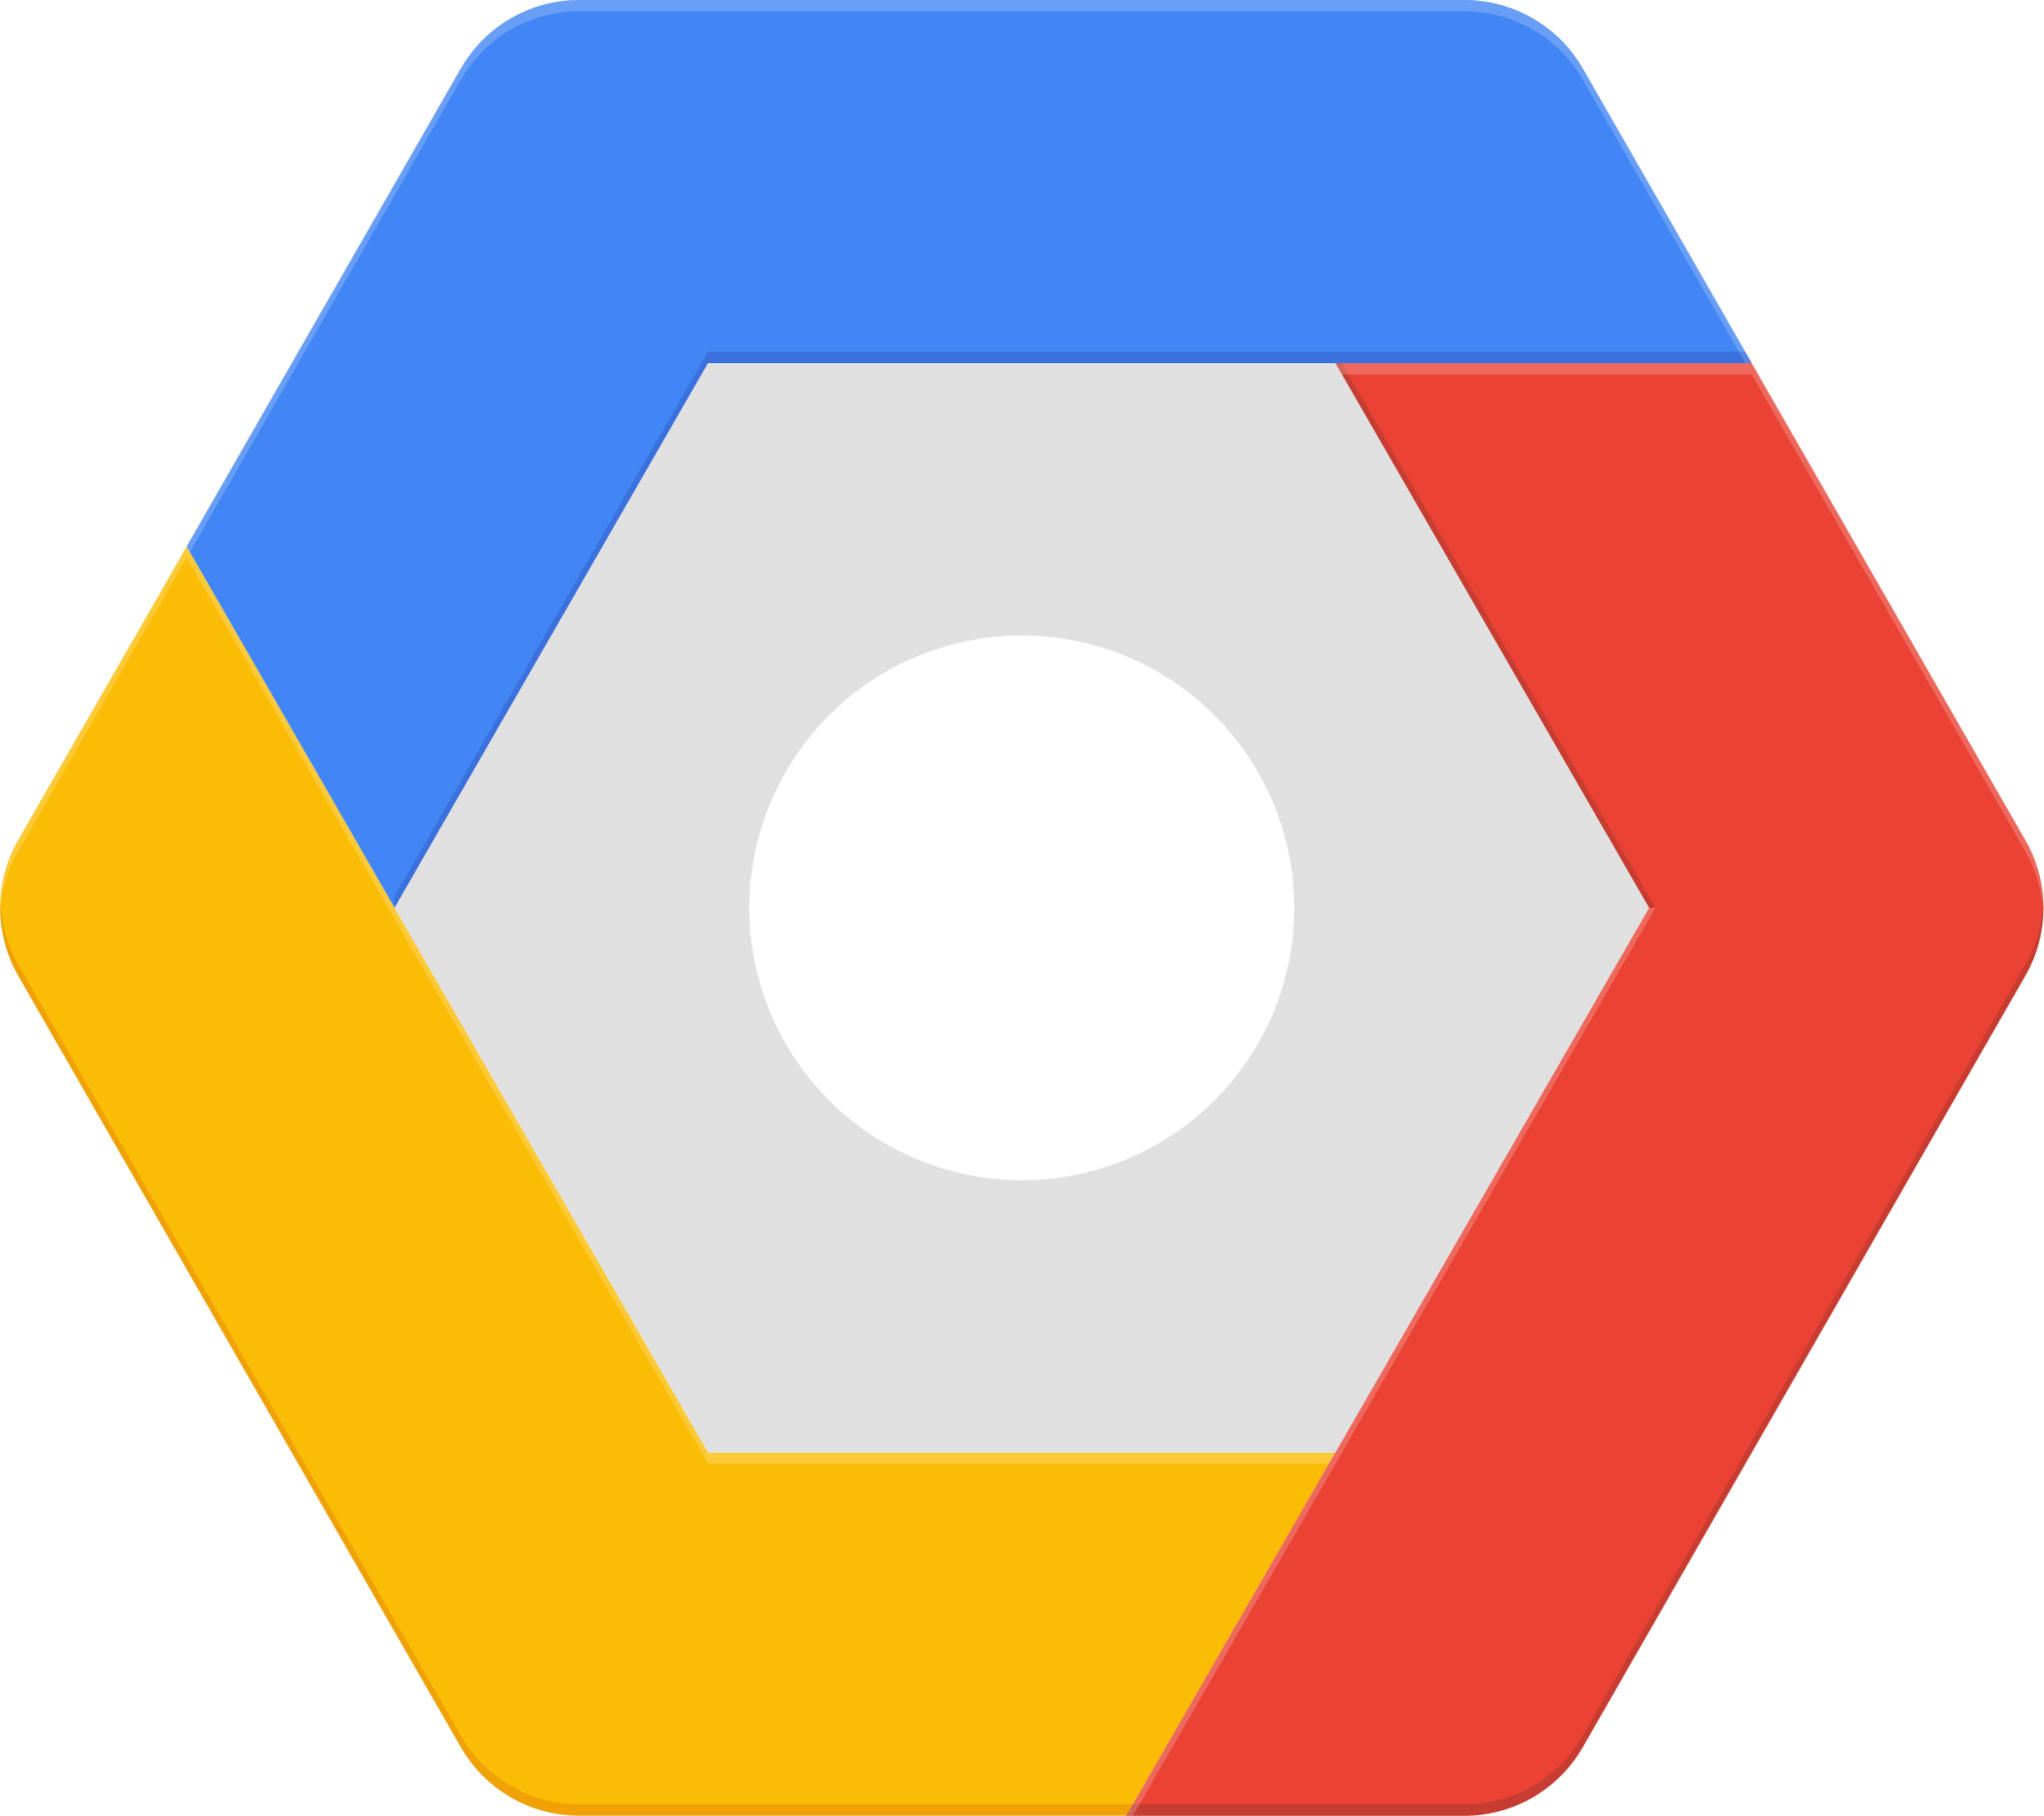 google cloud platform icon